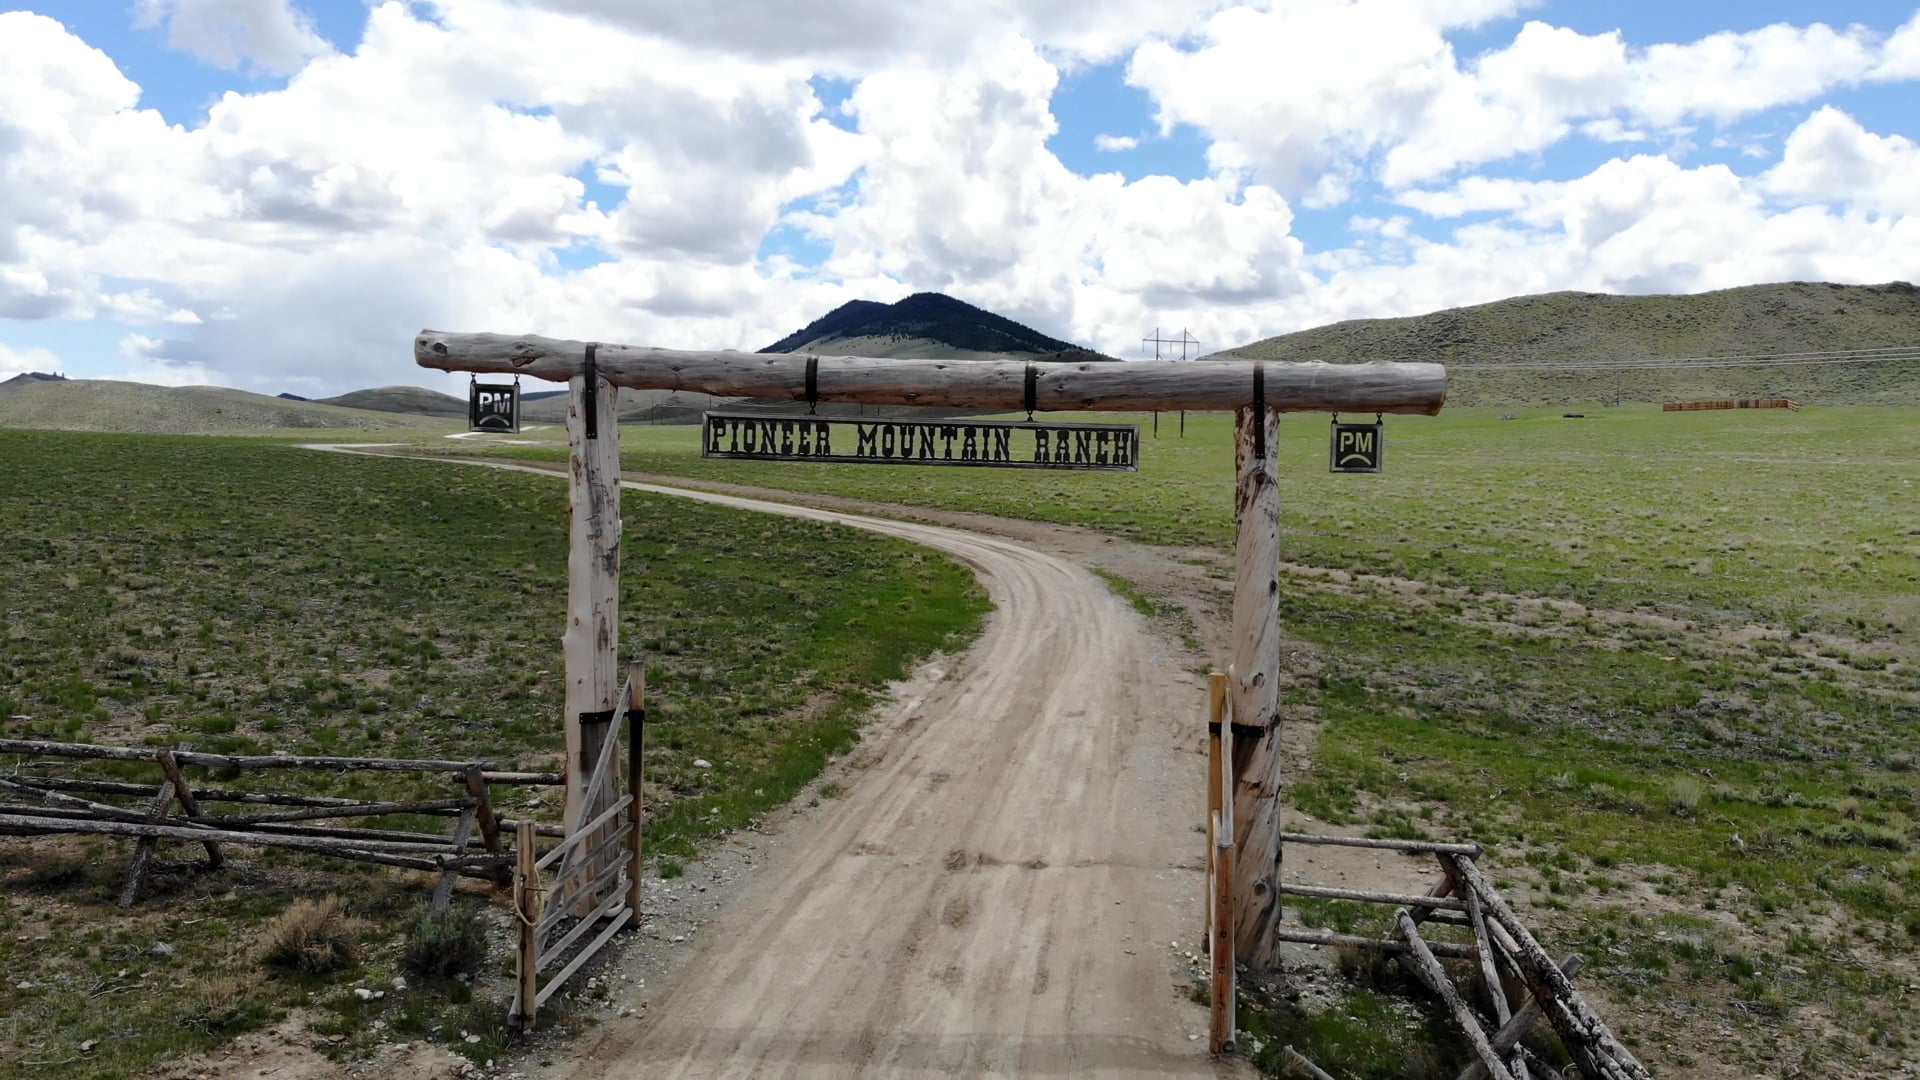 Pioneer Mountain Ranch.m4v